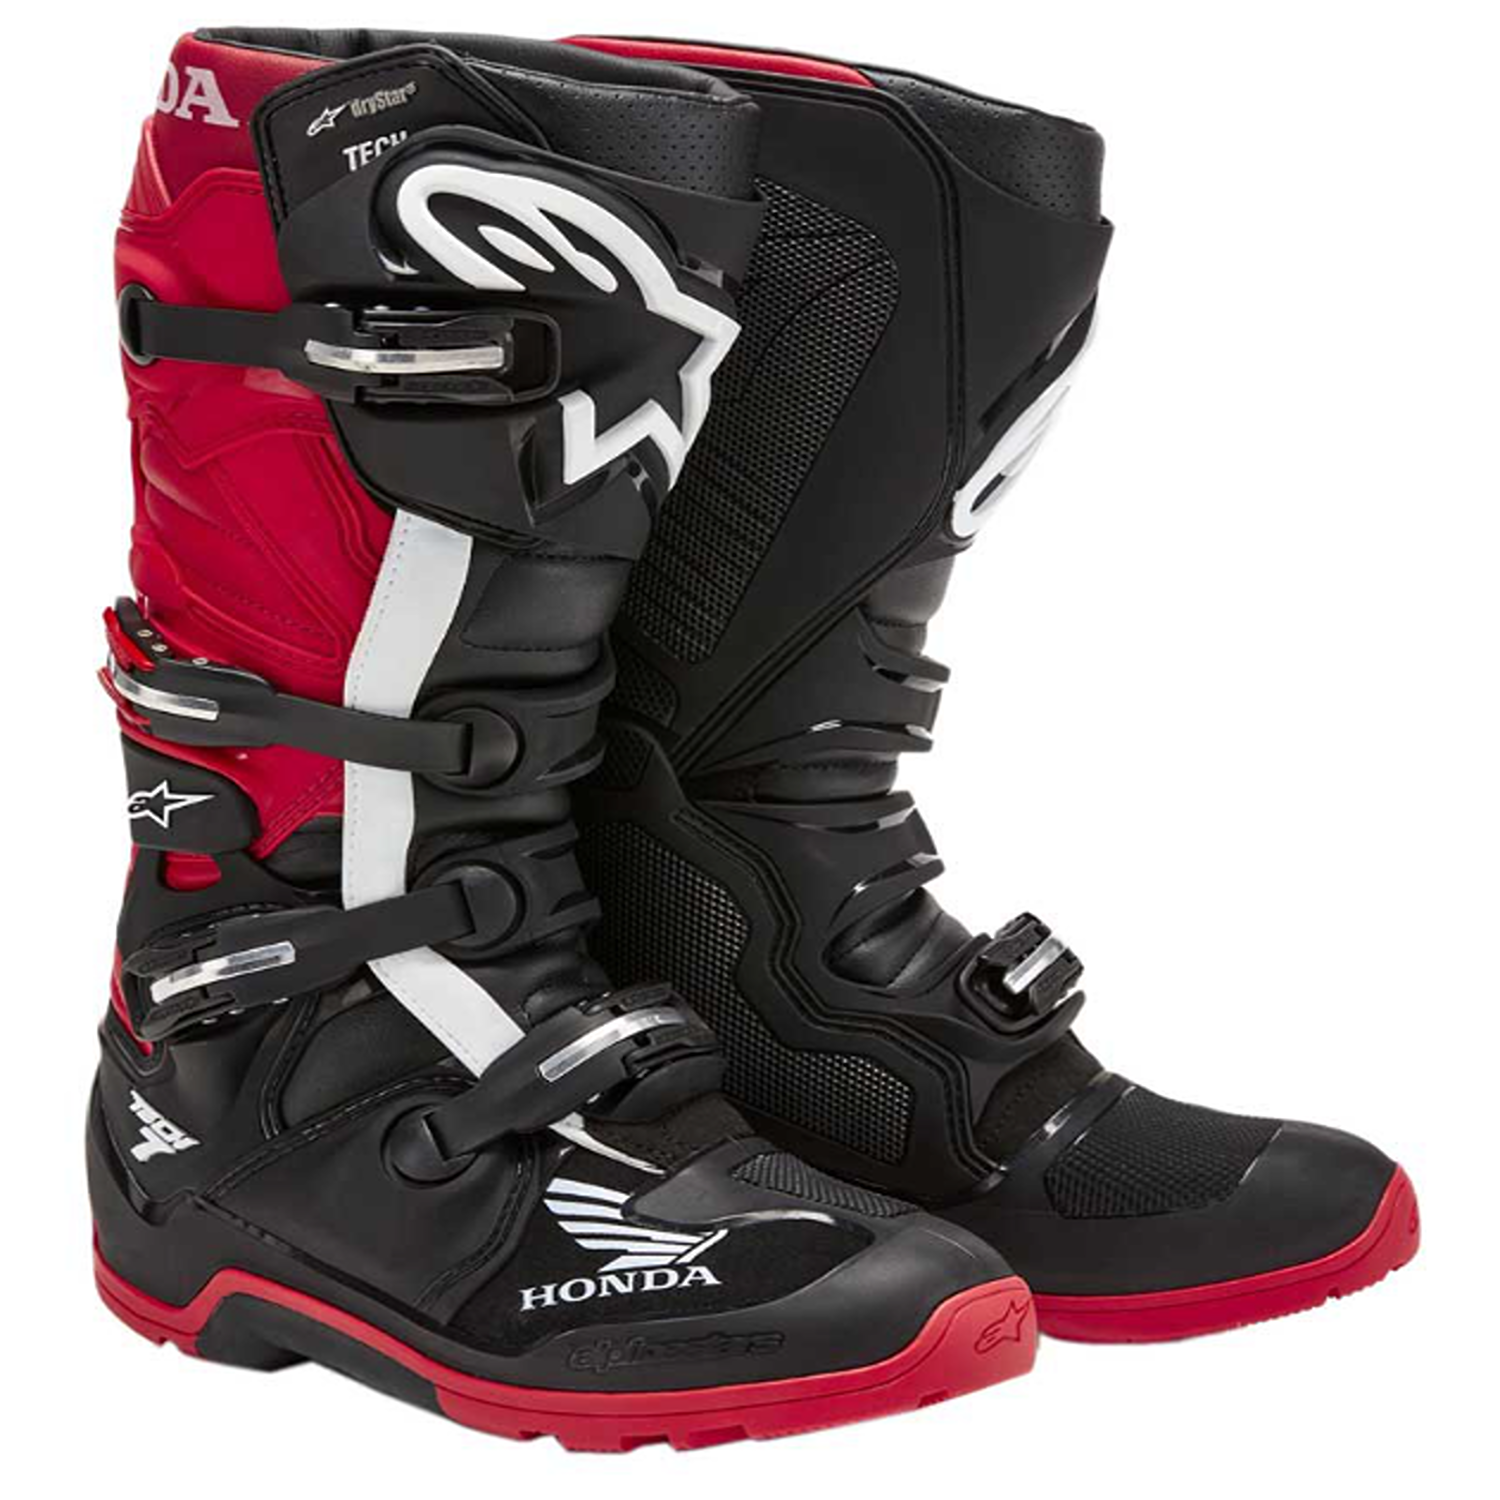 Image of Alpinestars Honda Tech 7 Enduro Drystar Boots Black Bright Red Taille US 12